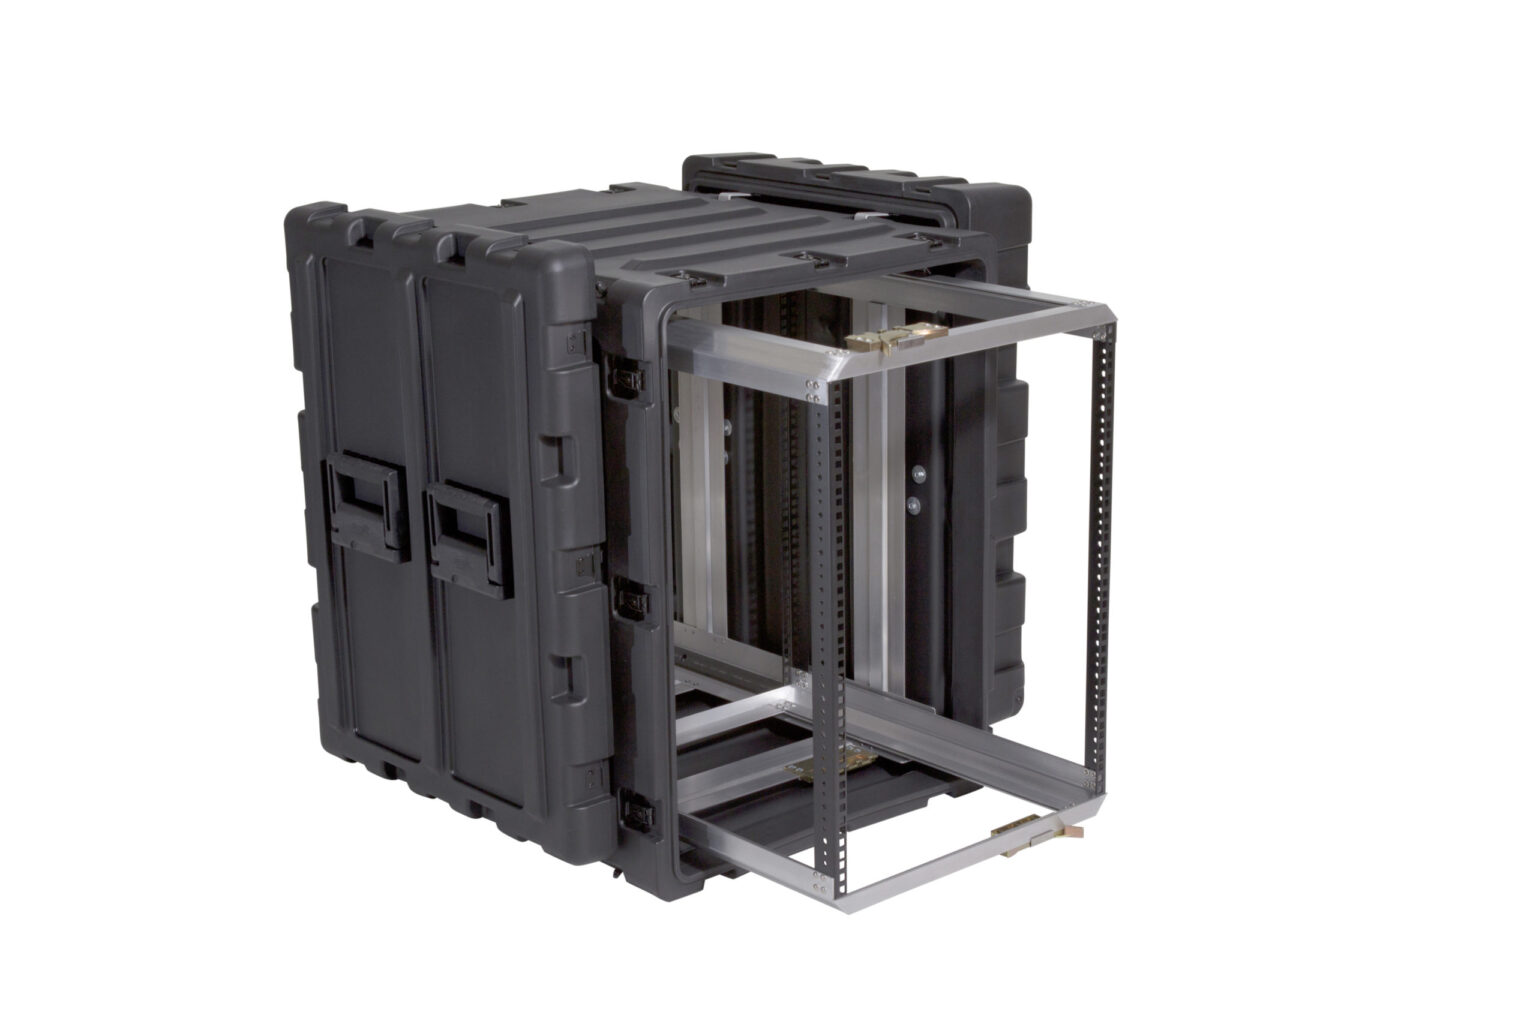 1SKB-R10U…10U Roto Rack Case